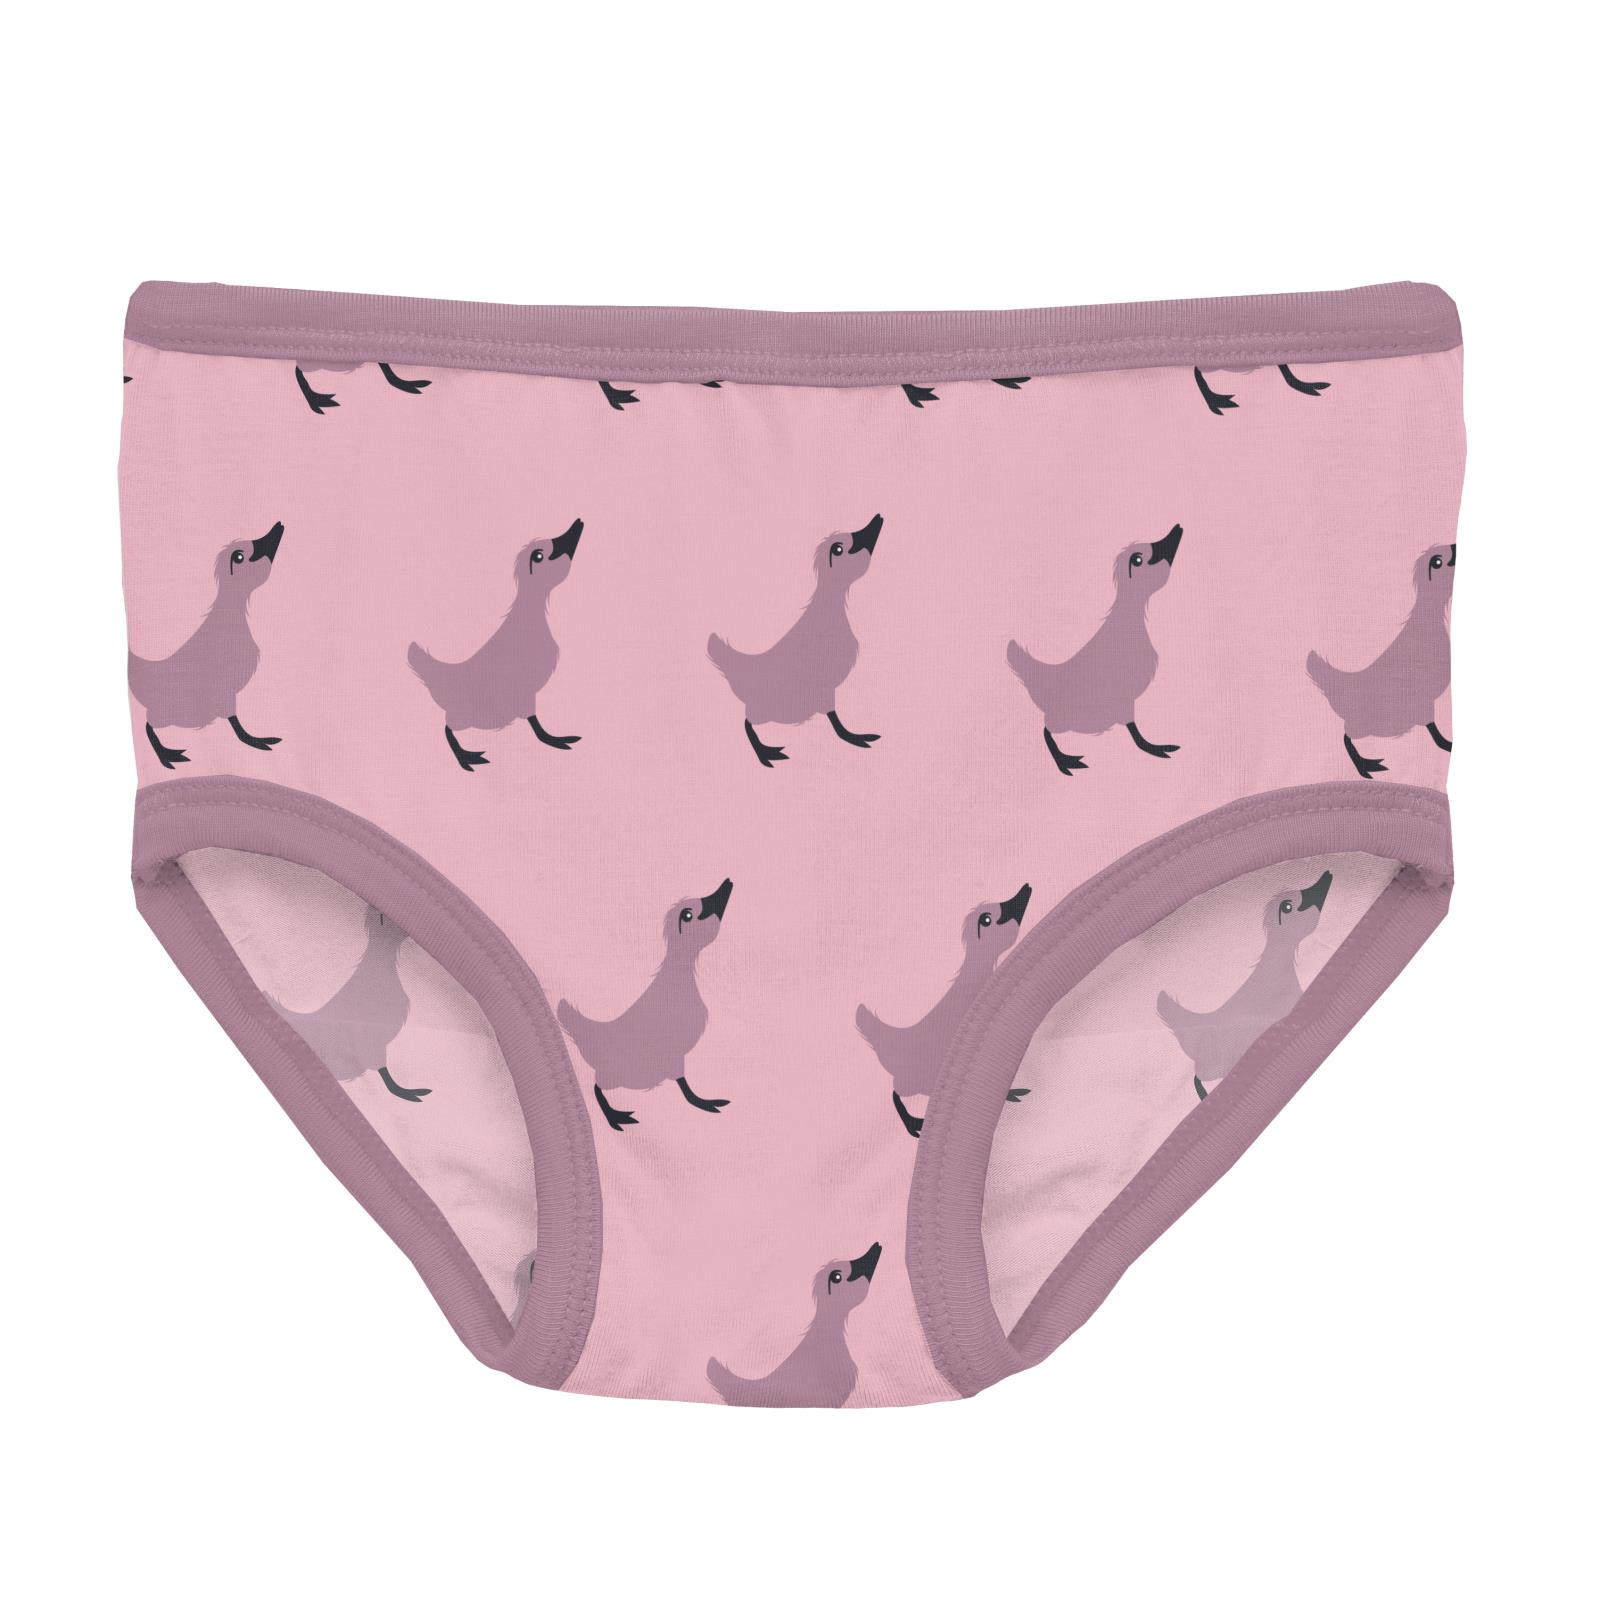 Kickee Pants Girl's Underwear: Cake Pop Ugly Duckling – Bellies to